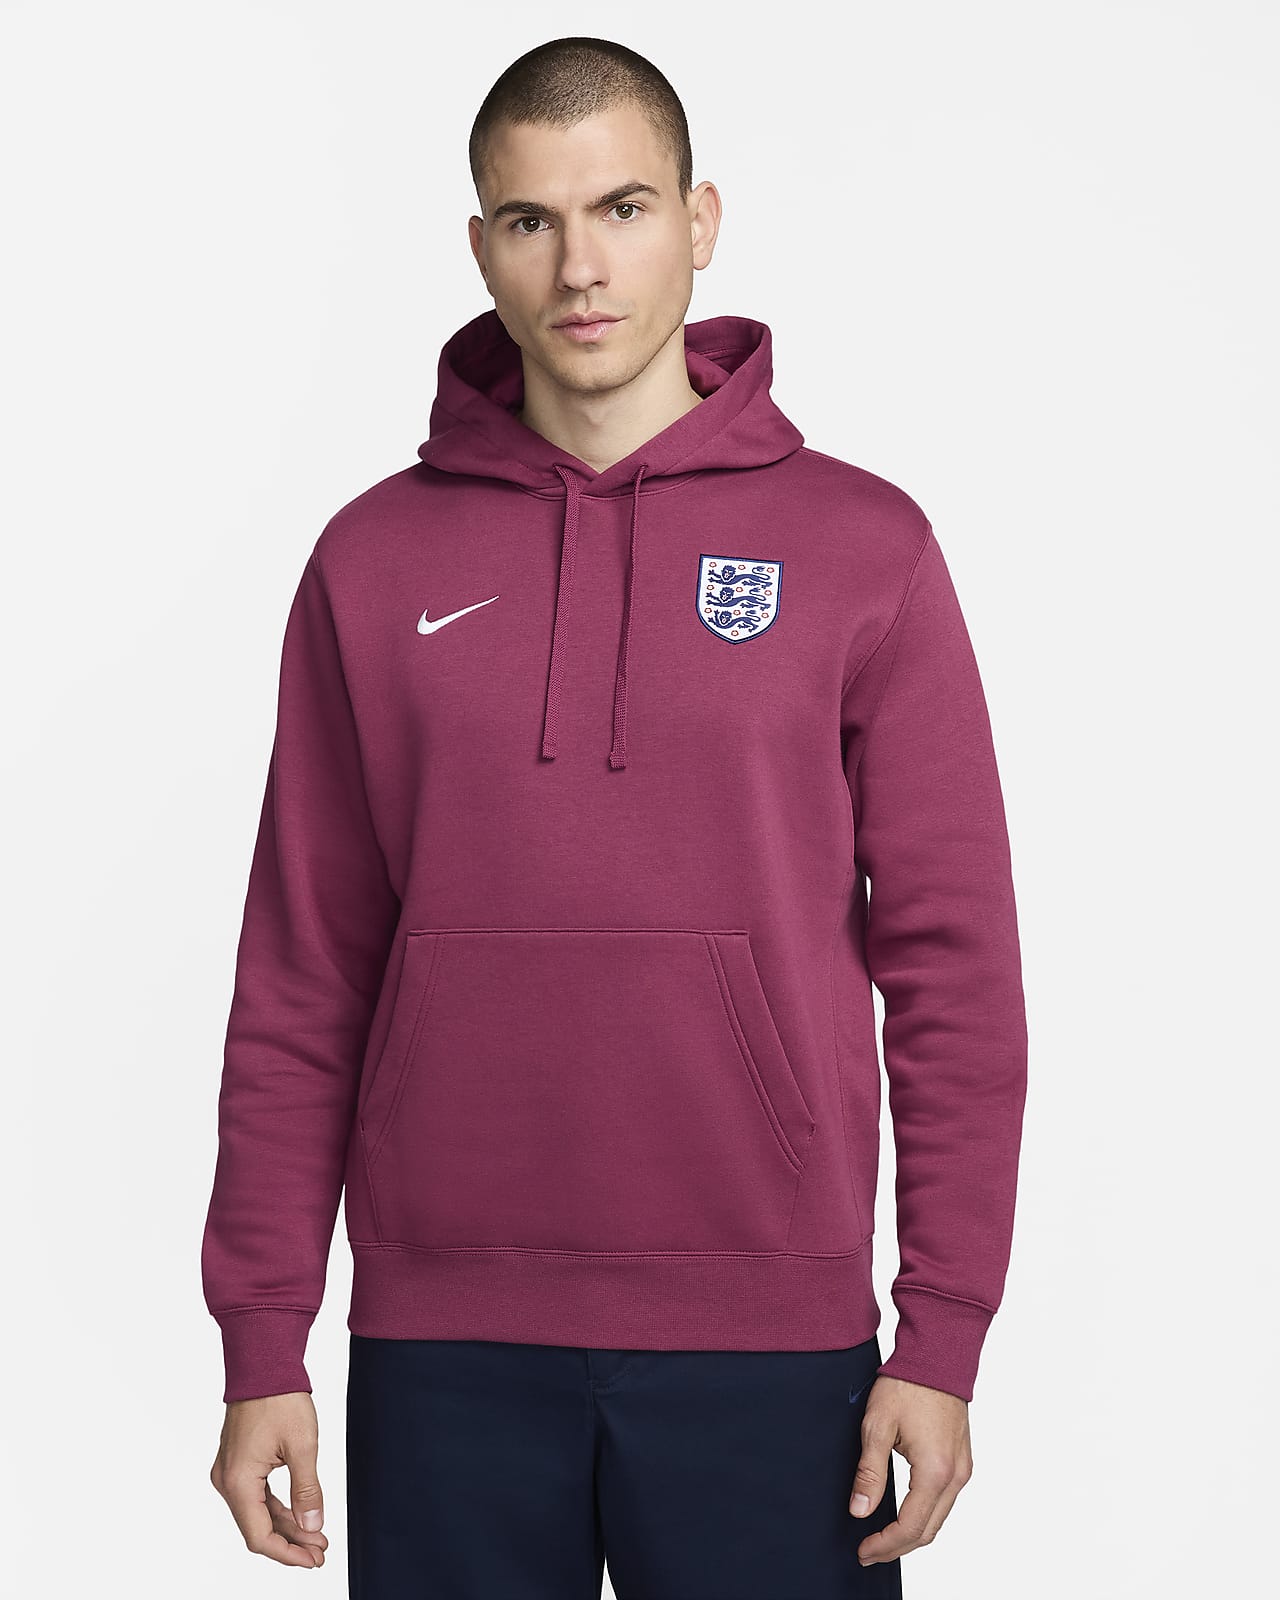 England Club Men's Nike Football Pullover Hoodie